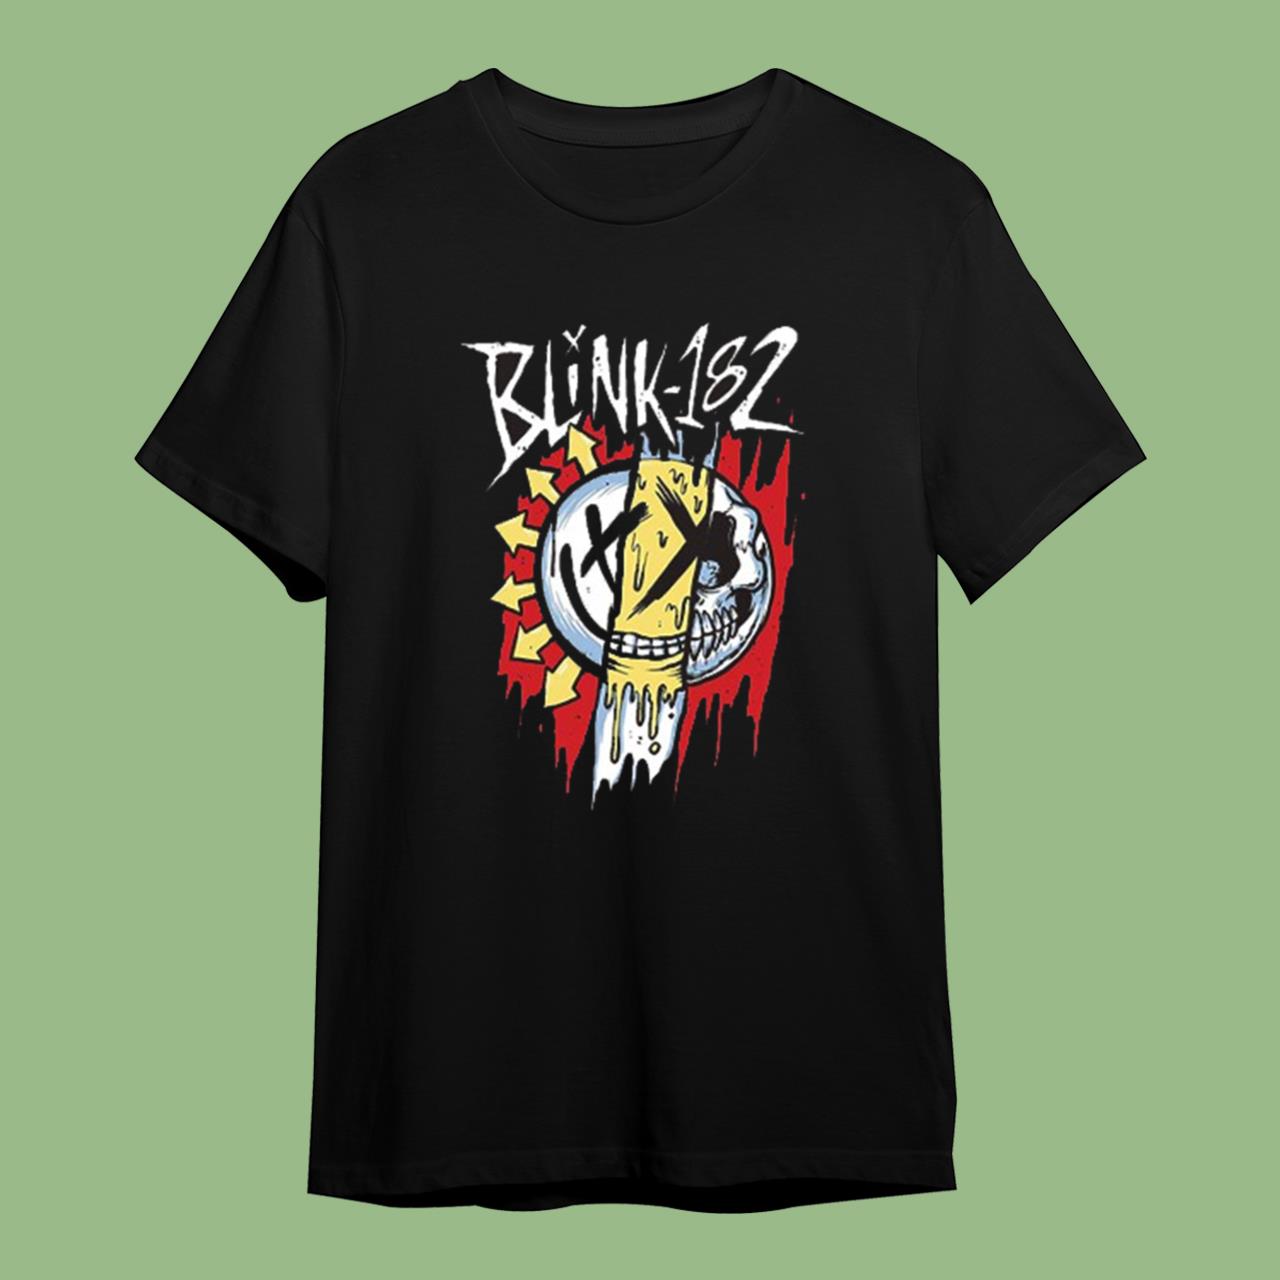 Retro Band Blink 182 Shirt